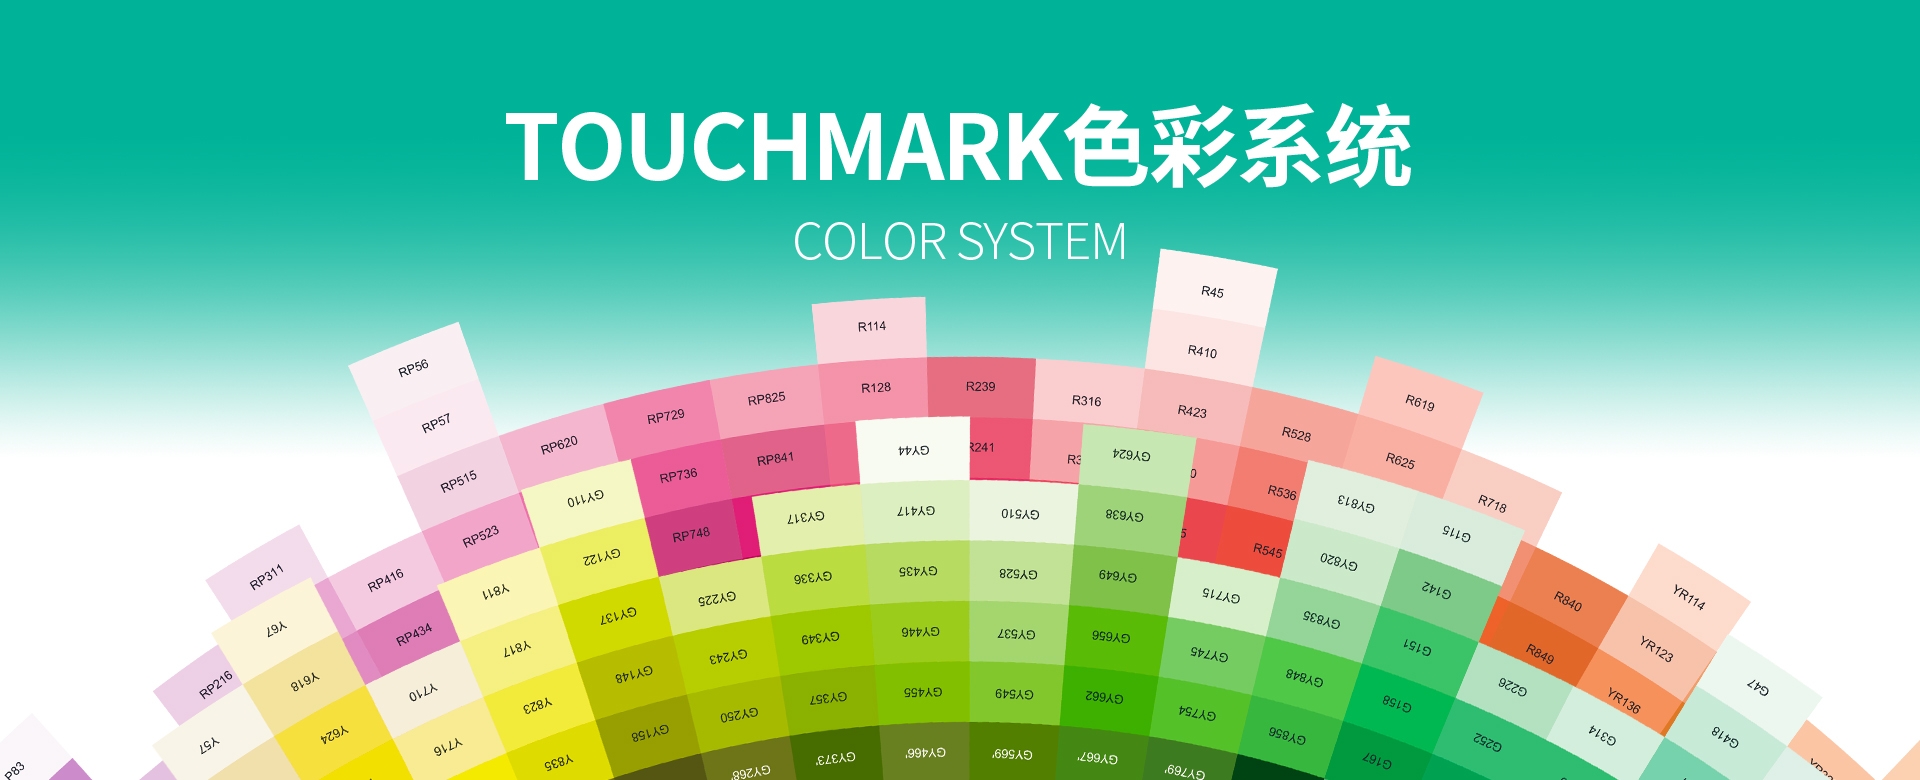 Touchmark官网，touchmark是一家专注于手绘设计、美术画材的美术用品品牌，Touchmark品牌产品有马克笔、固体水彩、针管笔、高光笔、自动铅笔、水彩画笔、纸张本册等产品